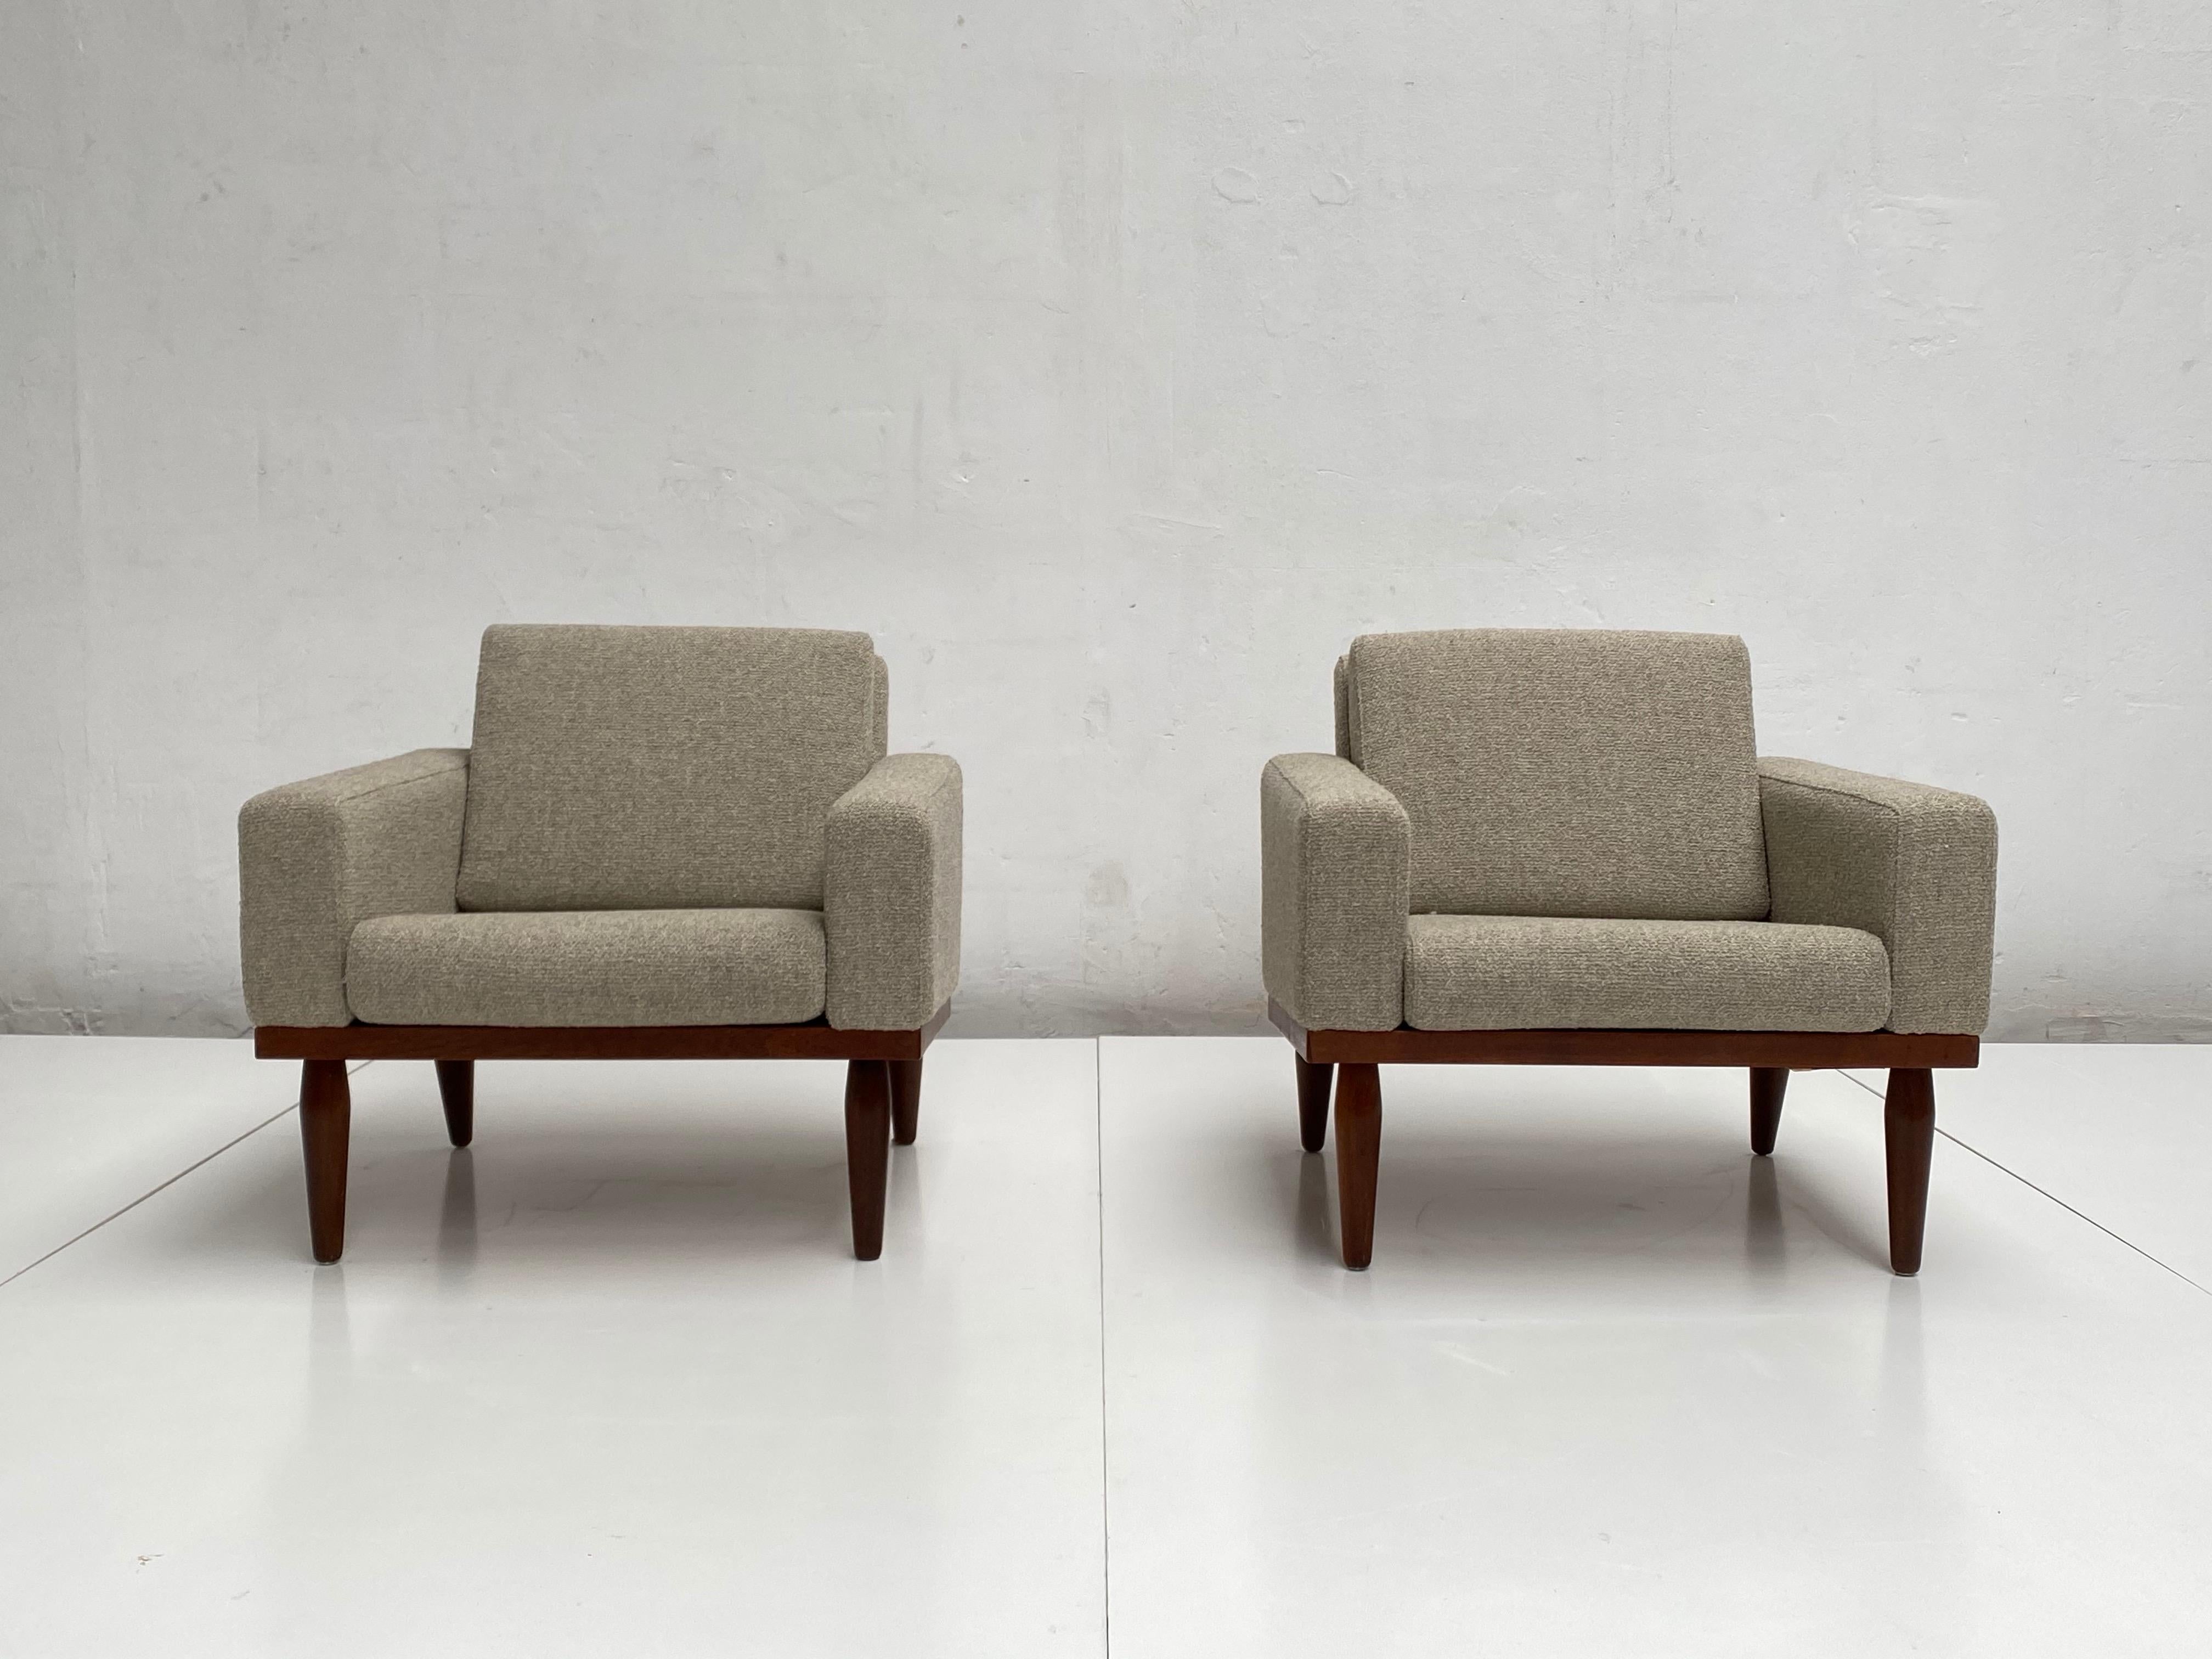 Pair of Danish Teak 1950s Lounge Chairs Bovenkamp The Netherlands New Upholstery For Sale 4